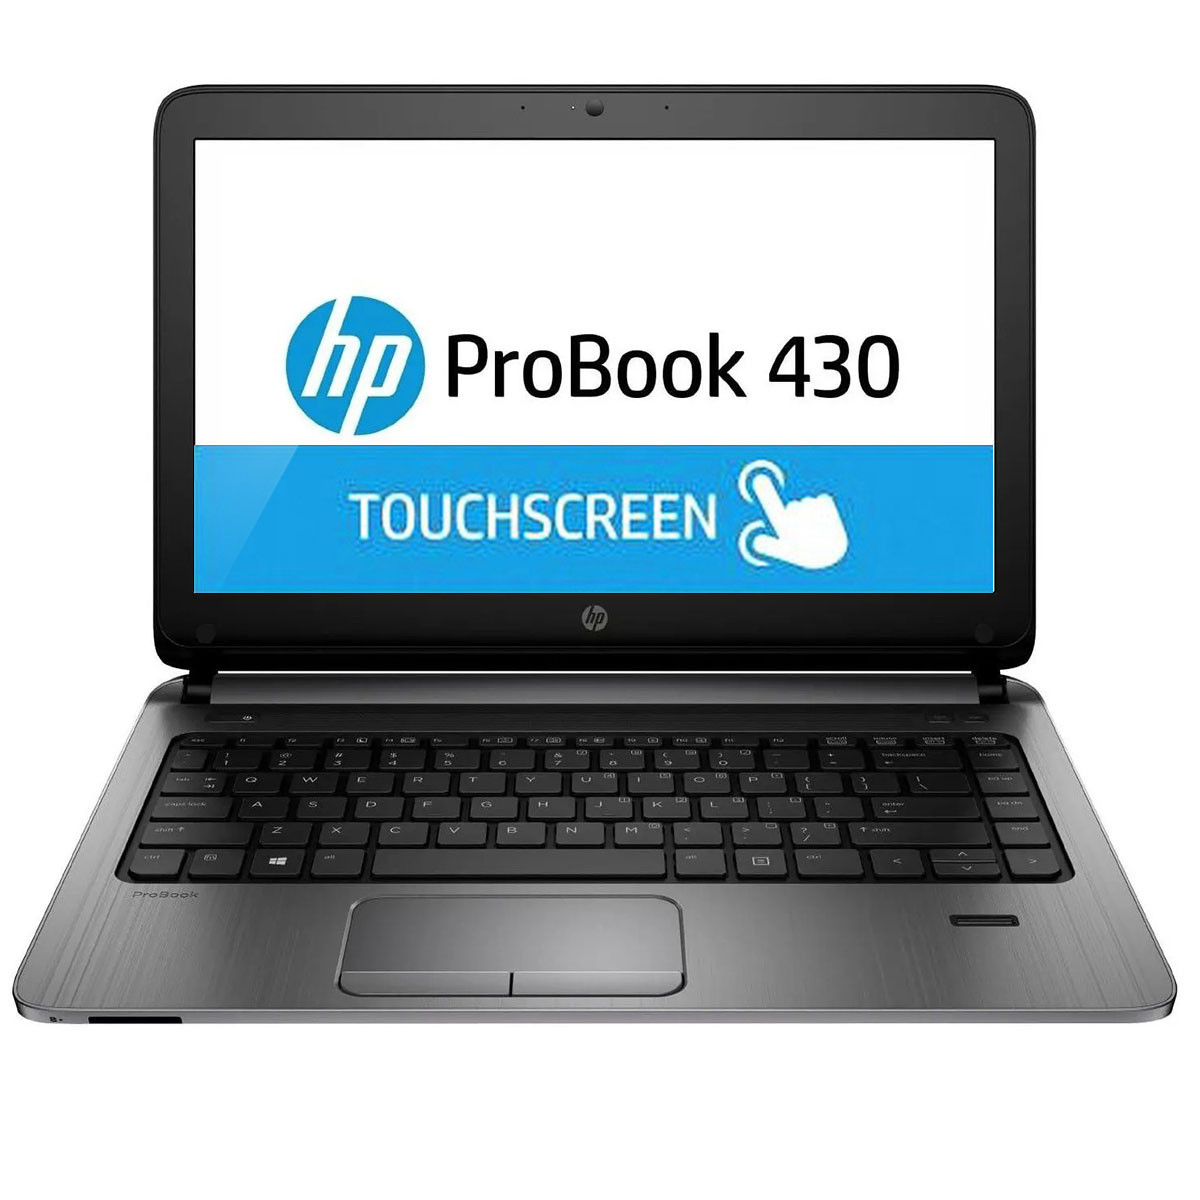 HP Probook 430 G3 Intel Core i5 6th Generation 8GB RAM 256GB HDD 13.3 Inches FHD Touchscreen Display